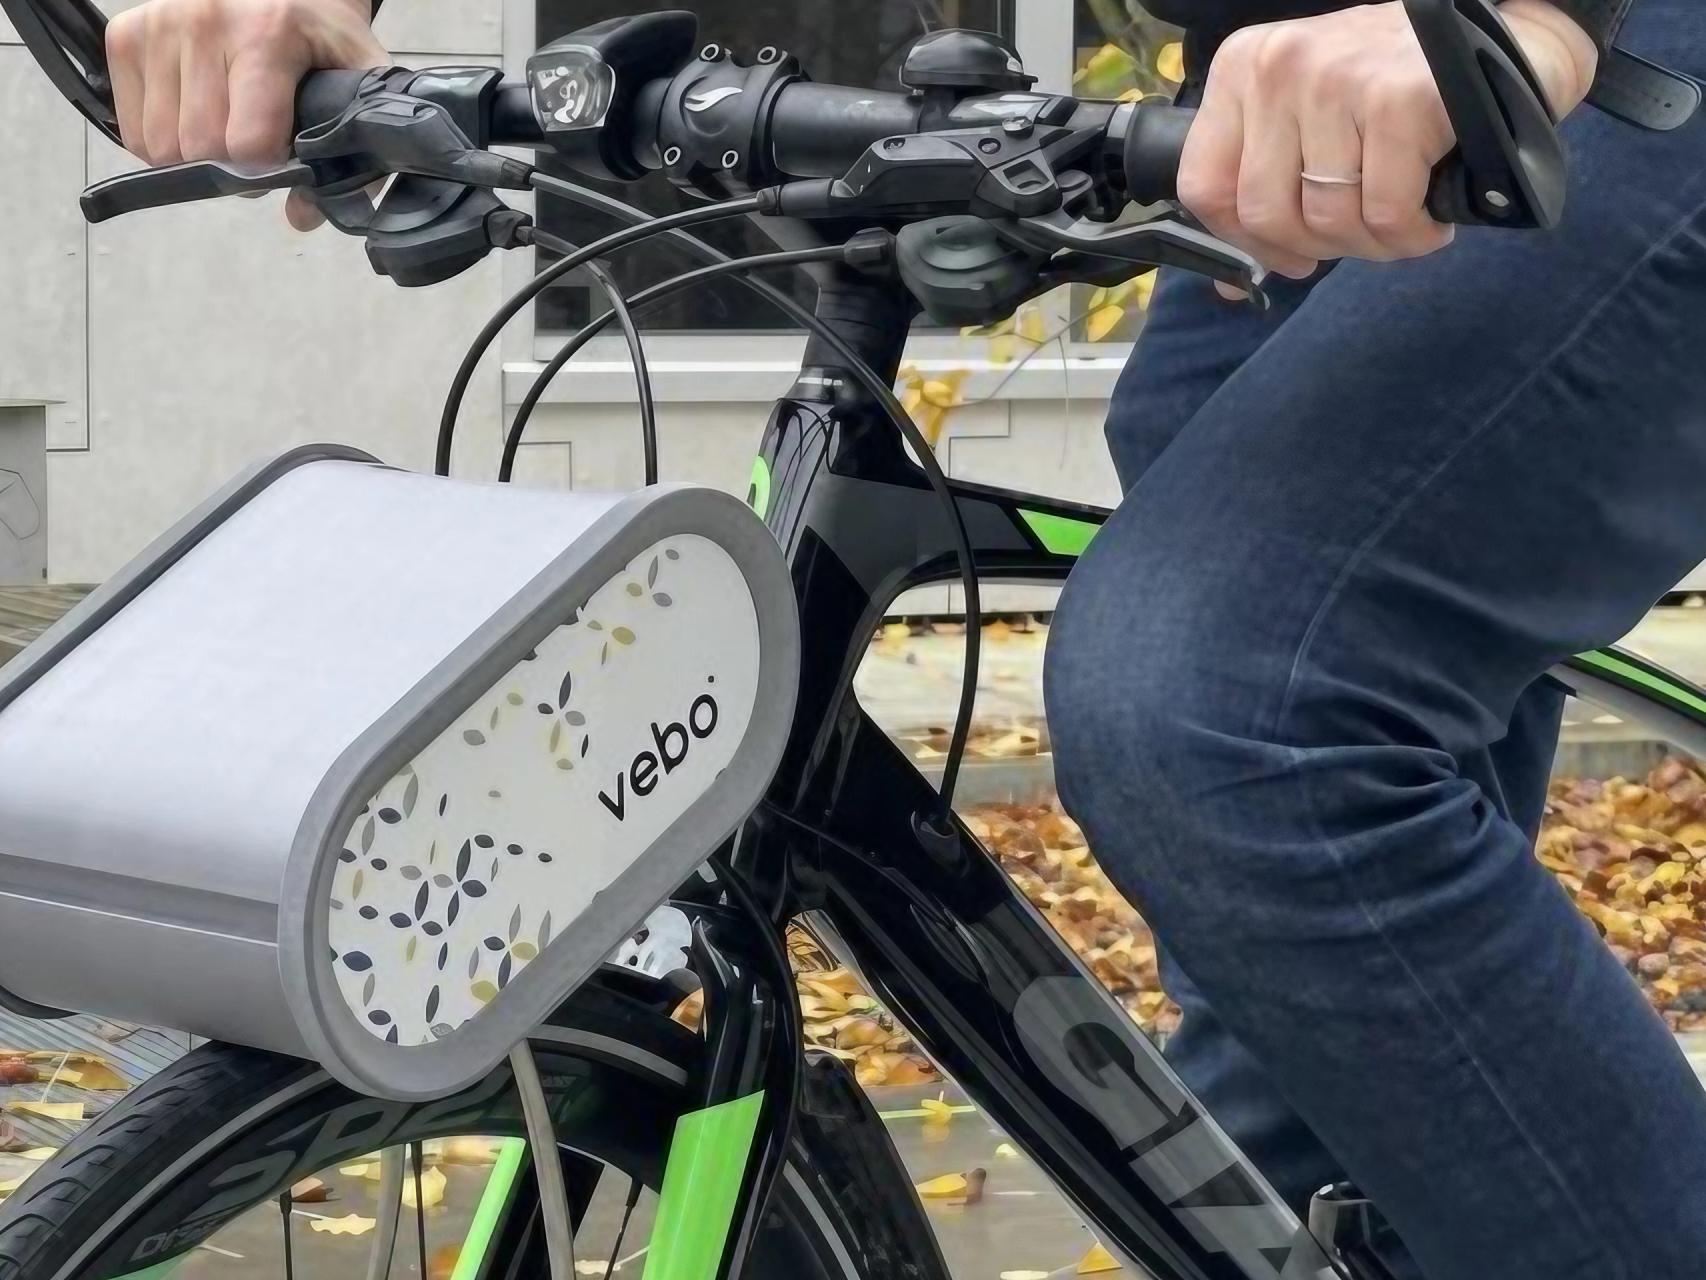 KIT BICI ELÉCTRICA, Cómo Convertir tu bicicleta en bicicleta eléctrica,  vídeo 6 minutos